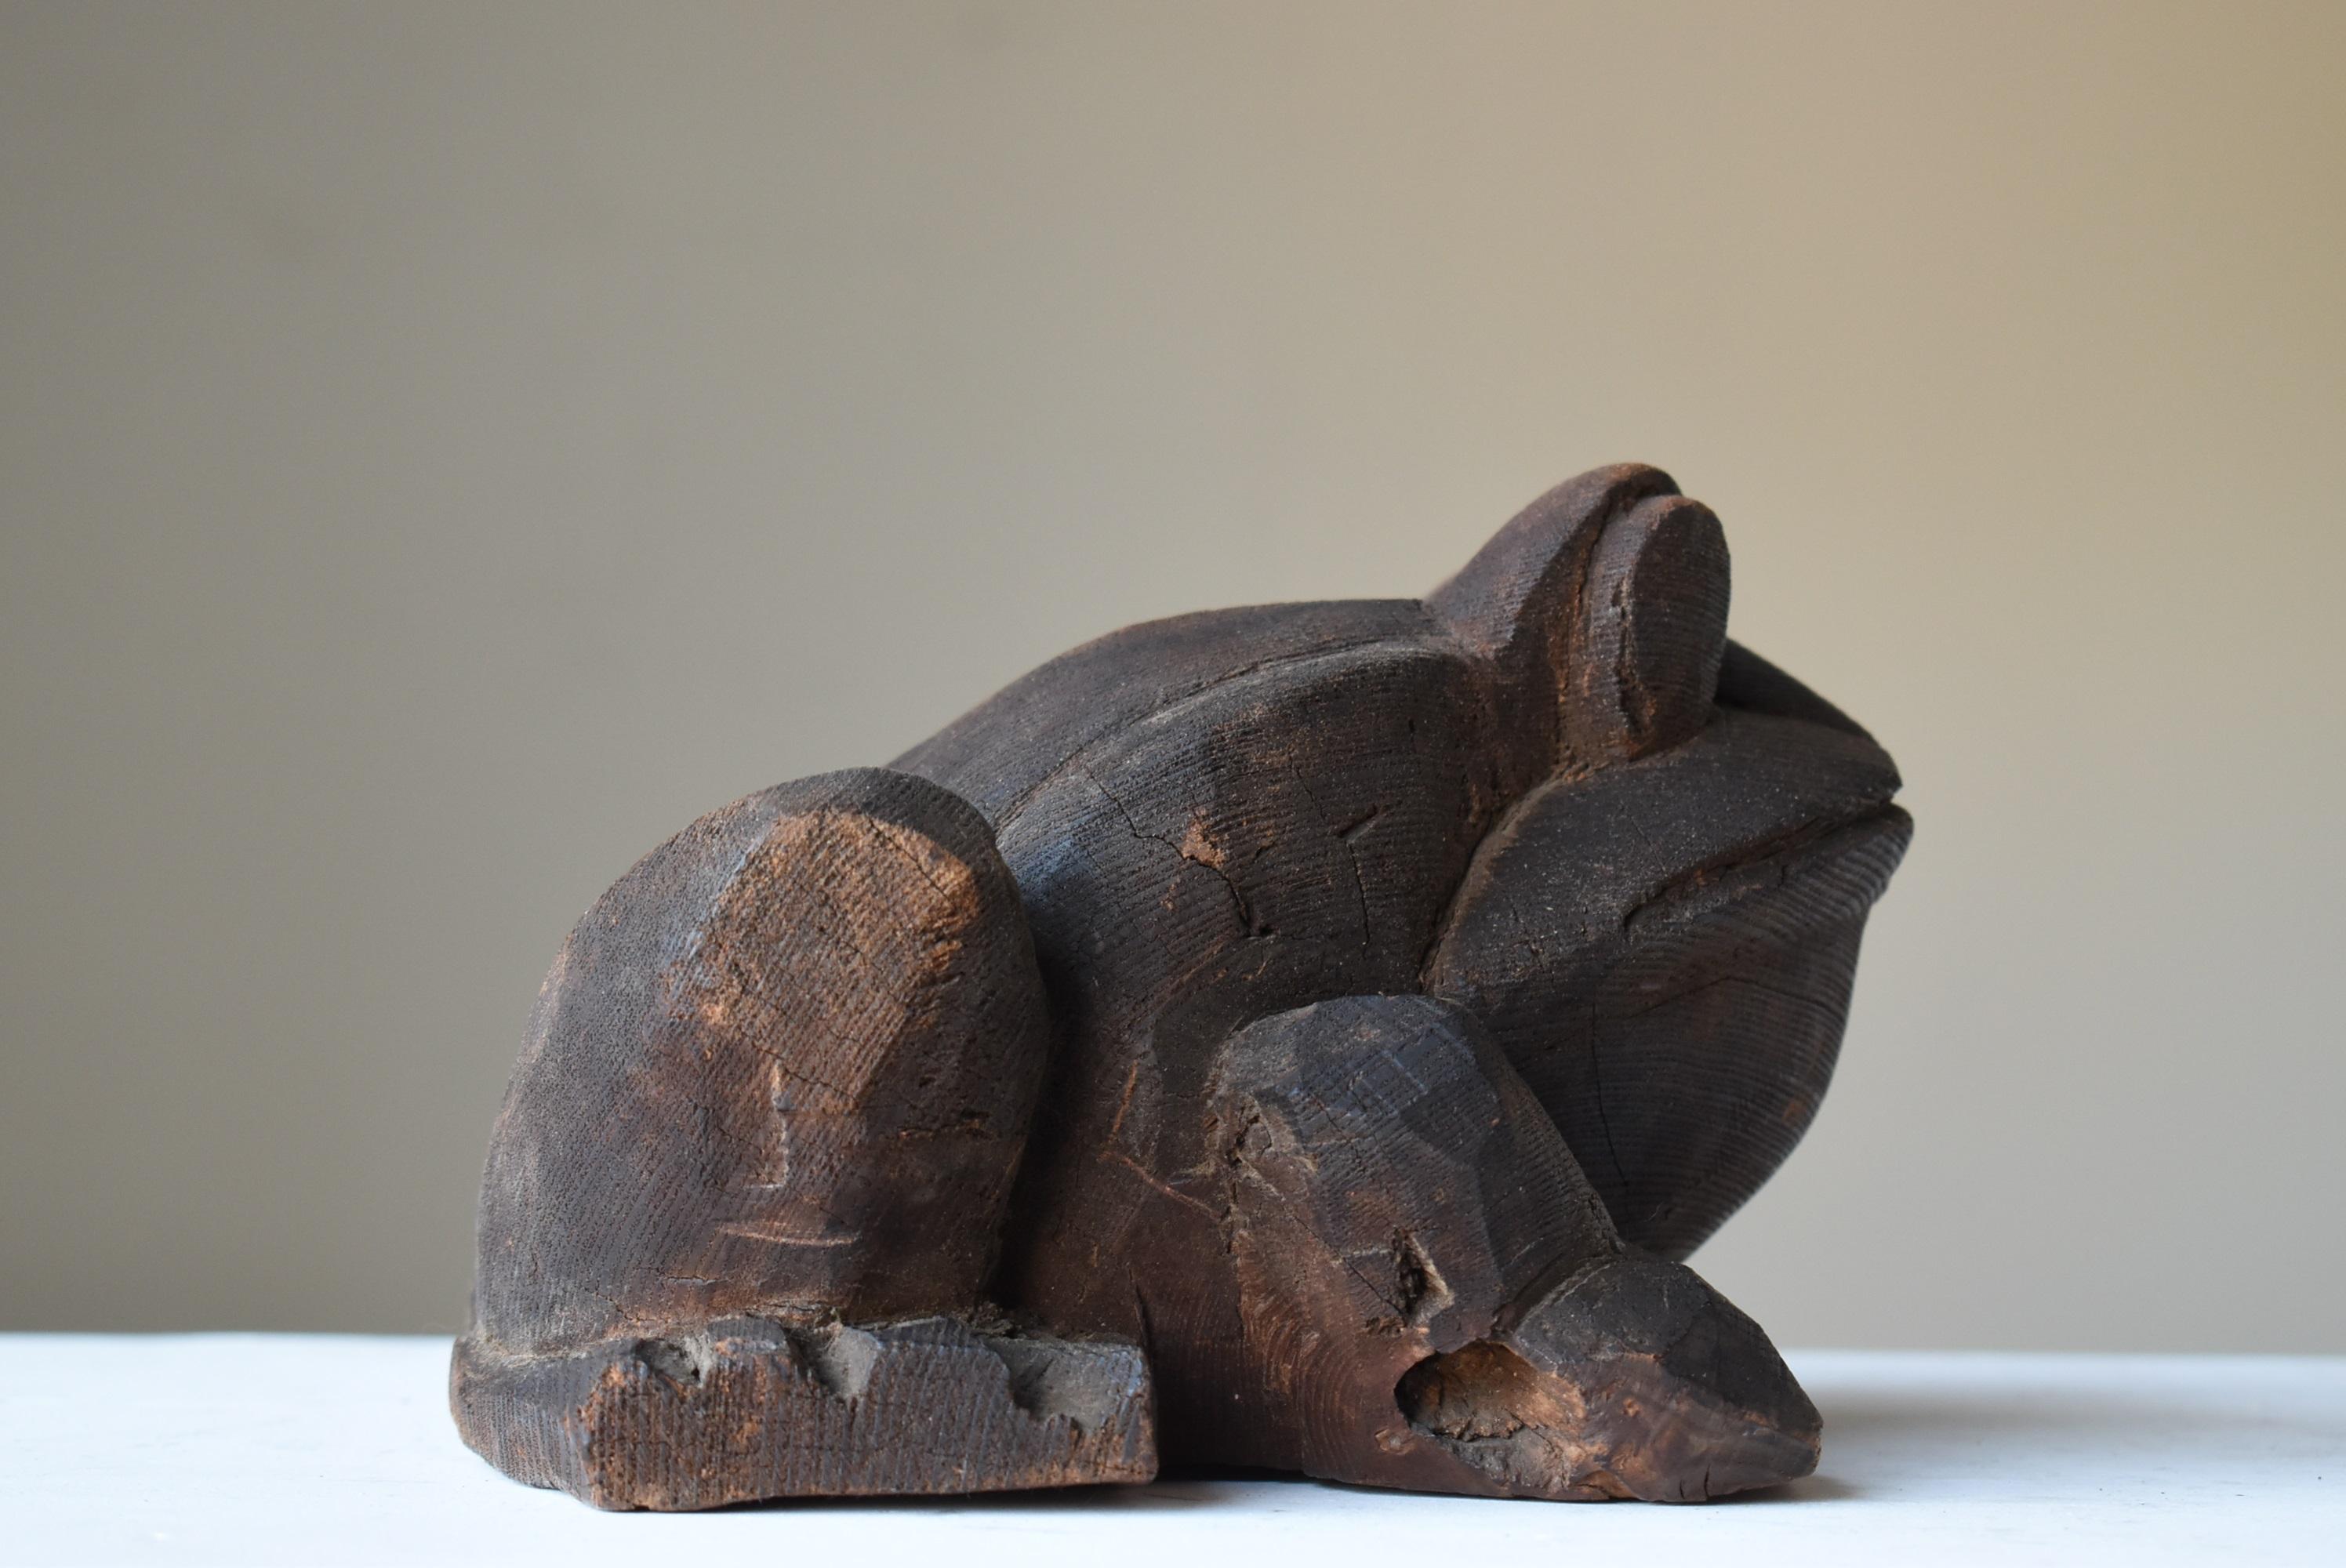 Japanese Antique Wood Carving Frog 1900s-1930s/Folk Art Mingei Wabisabi Object 1